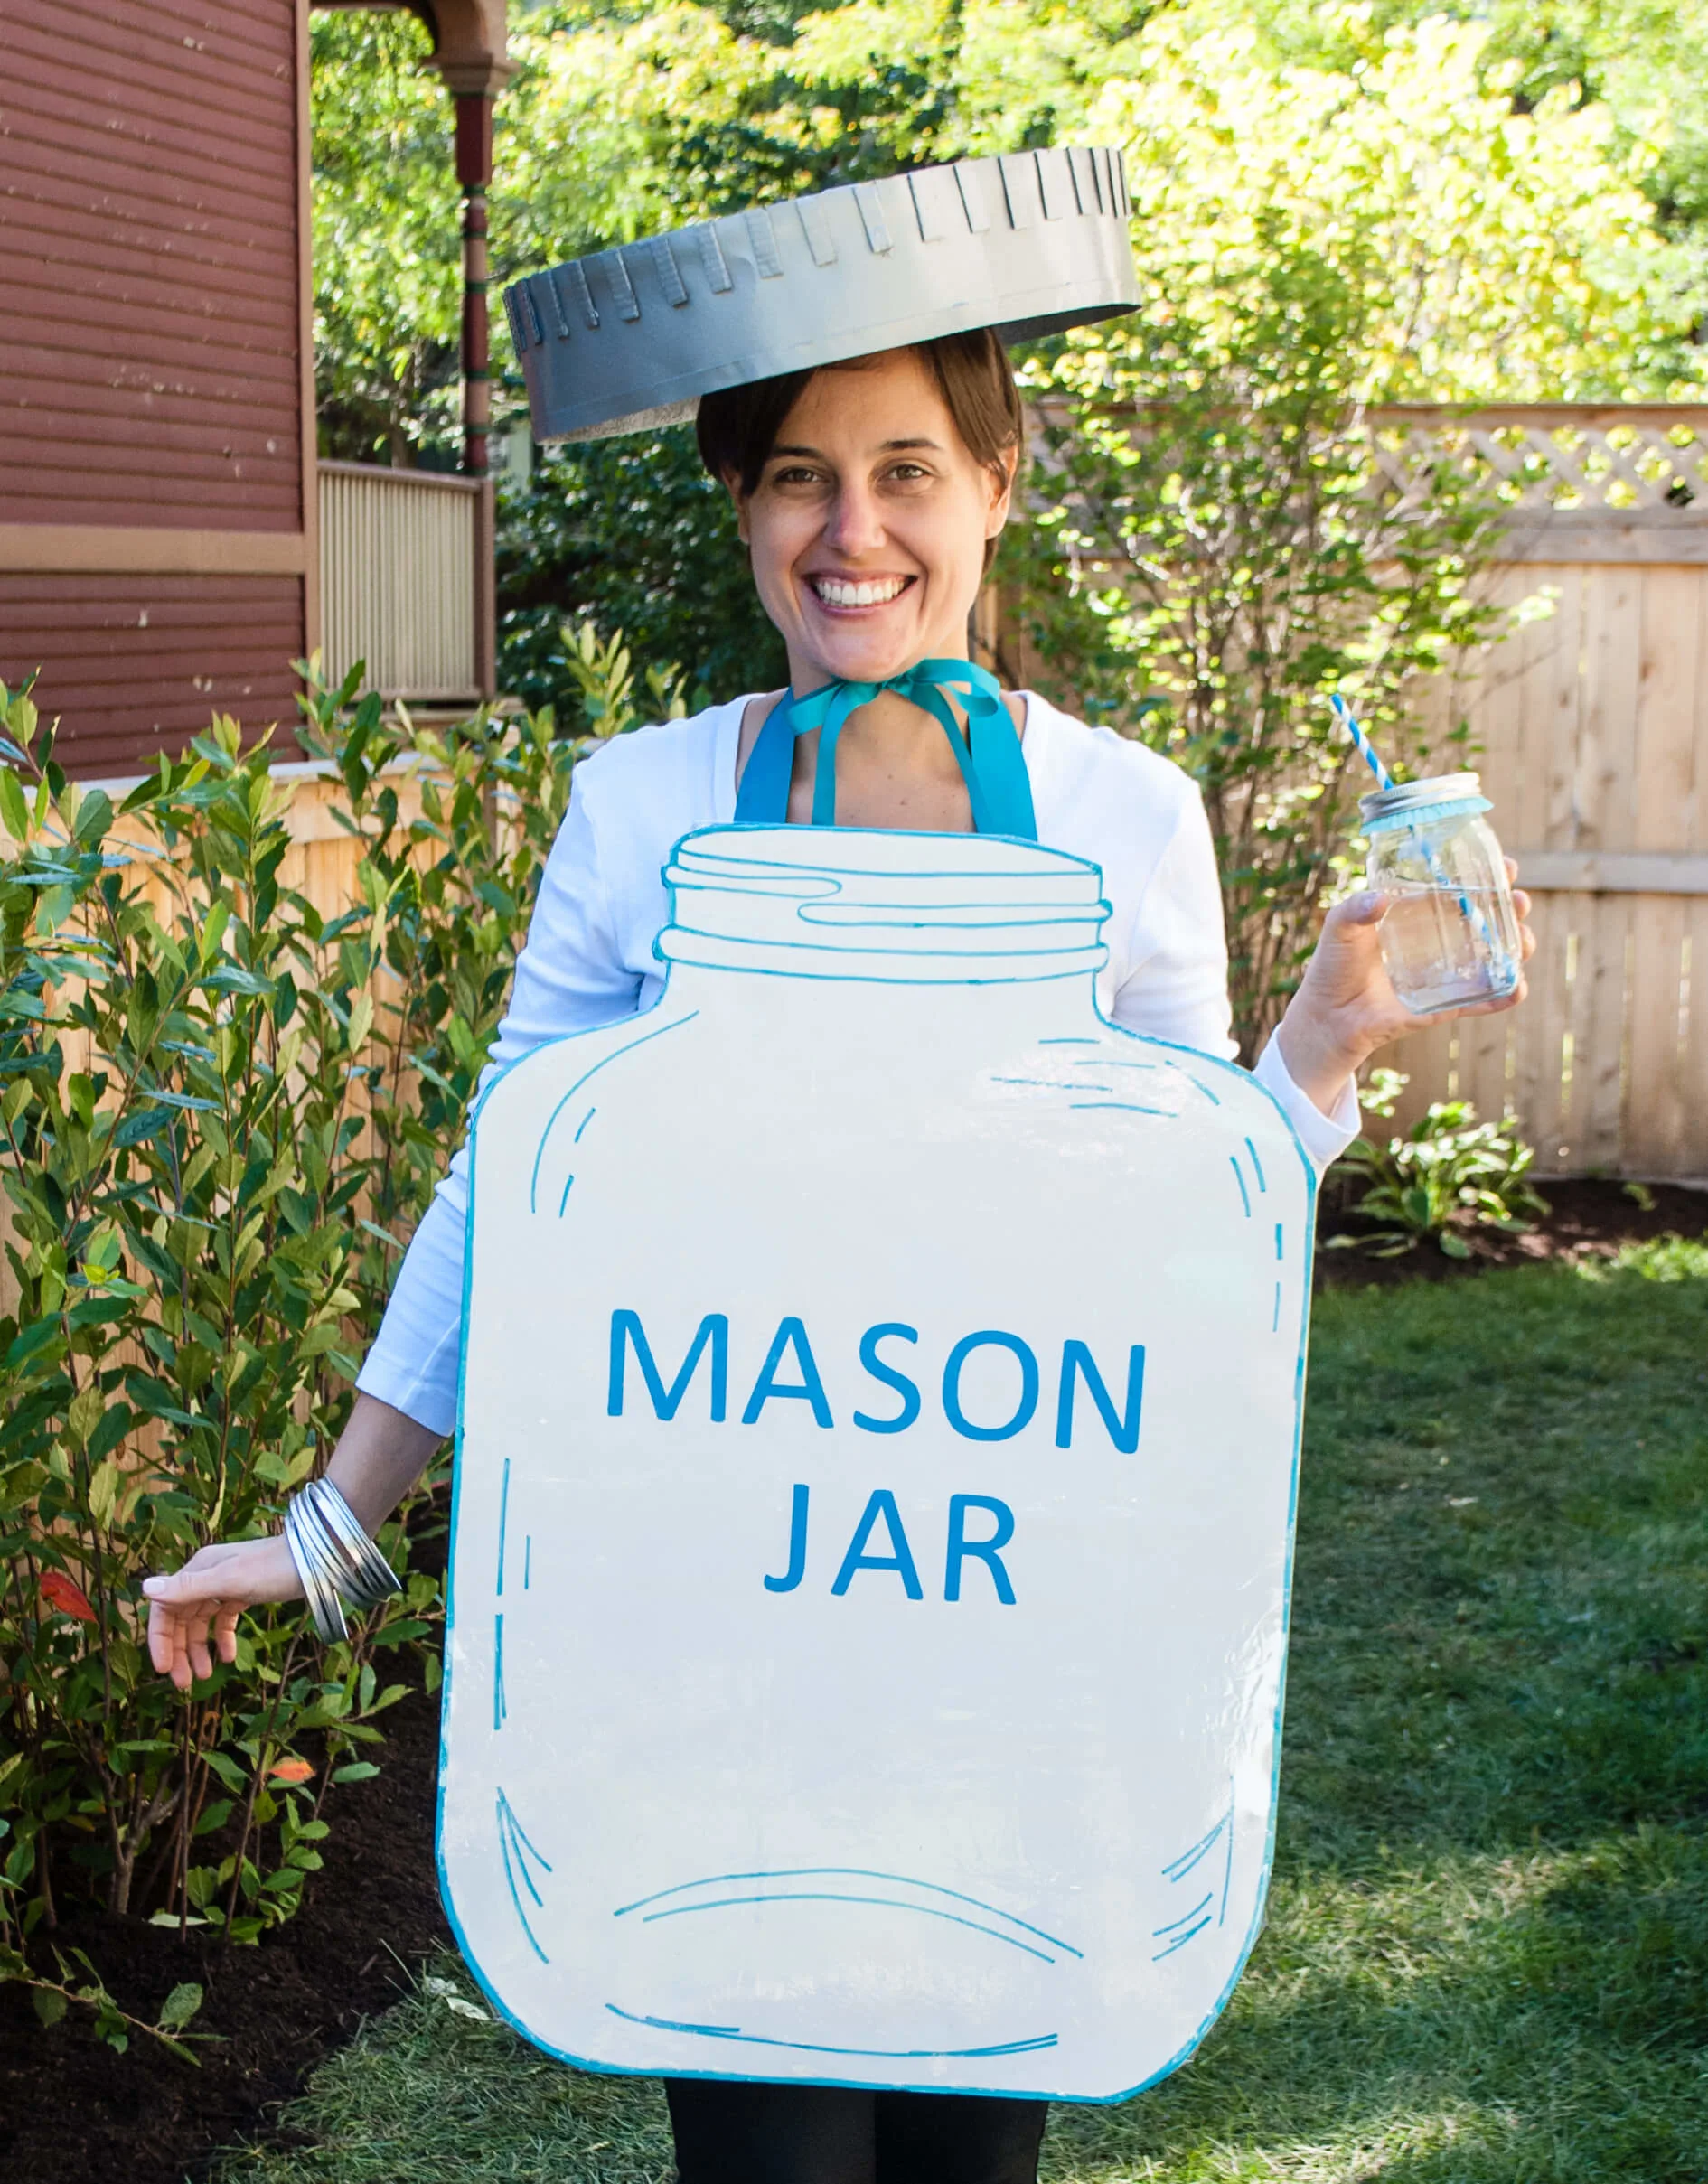 Mason Jar Halloween Costume - Easy DIY Halloween Costume Idea for Women -  Merriment Design